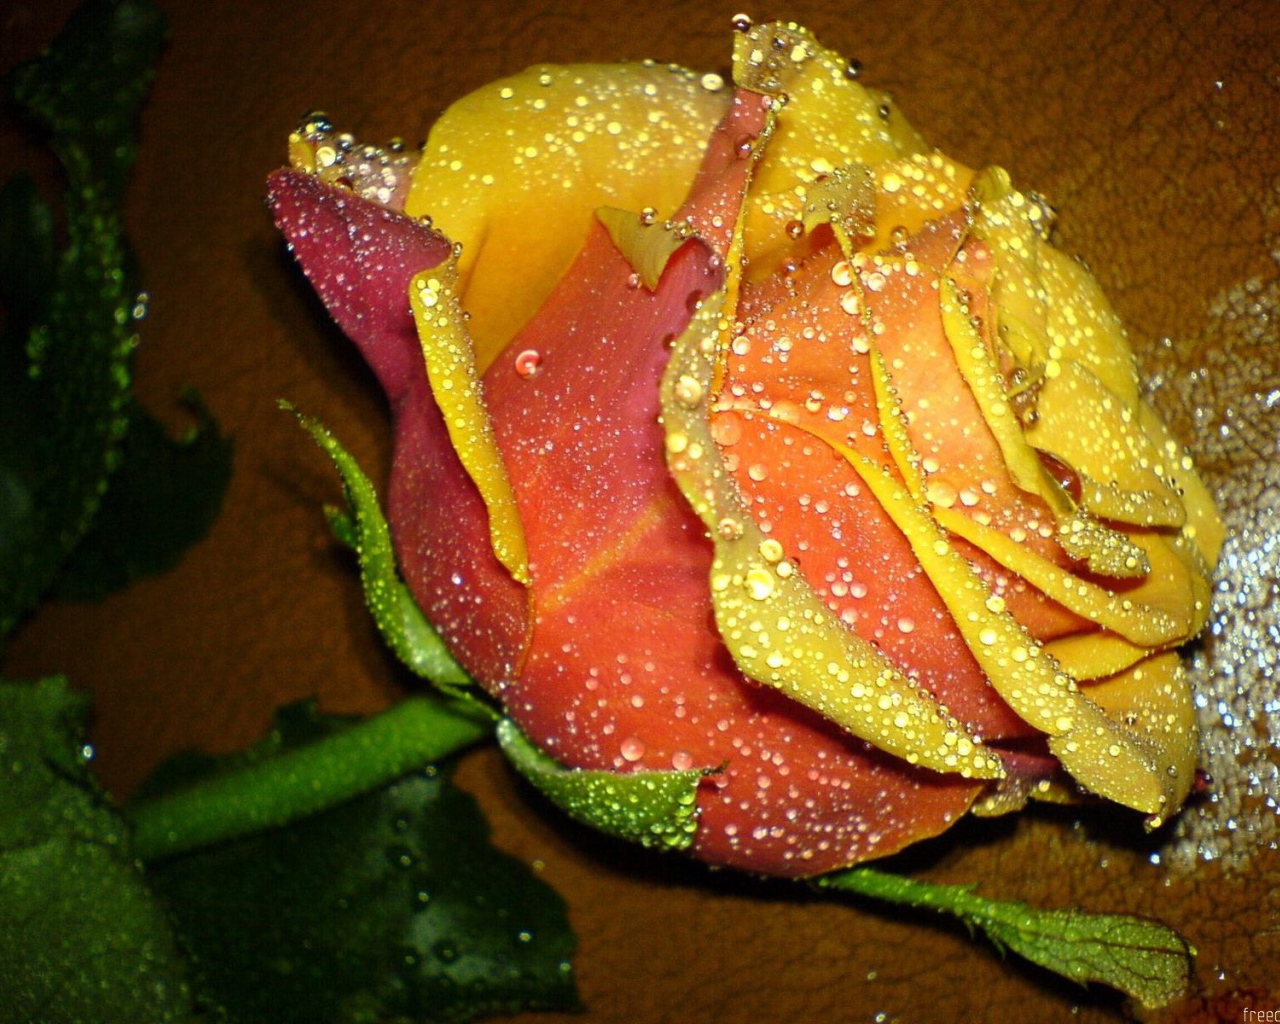 Прекрасная желтая роза